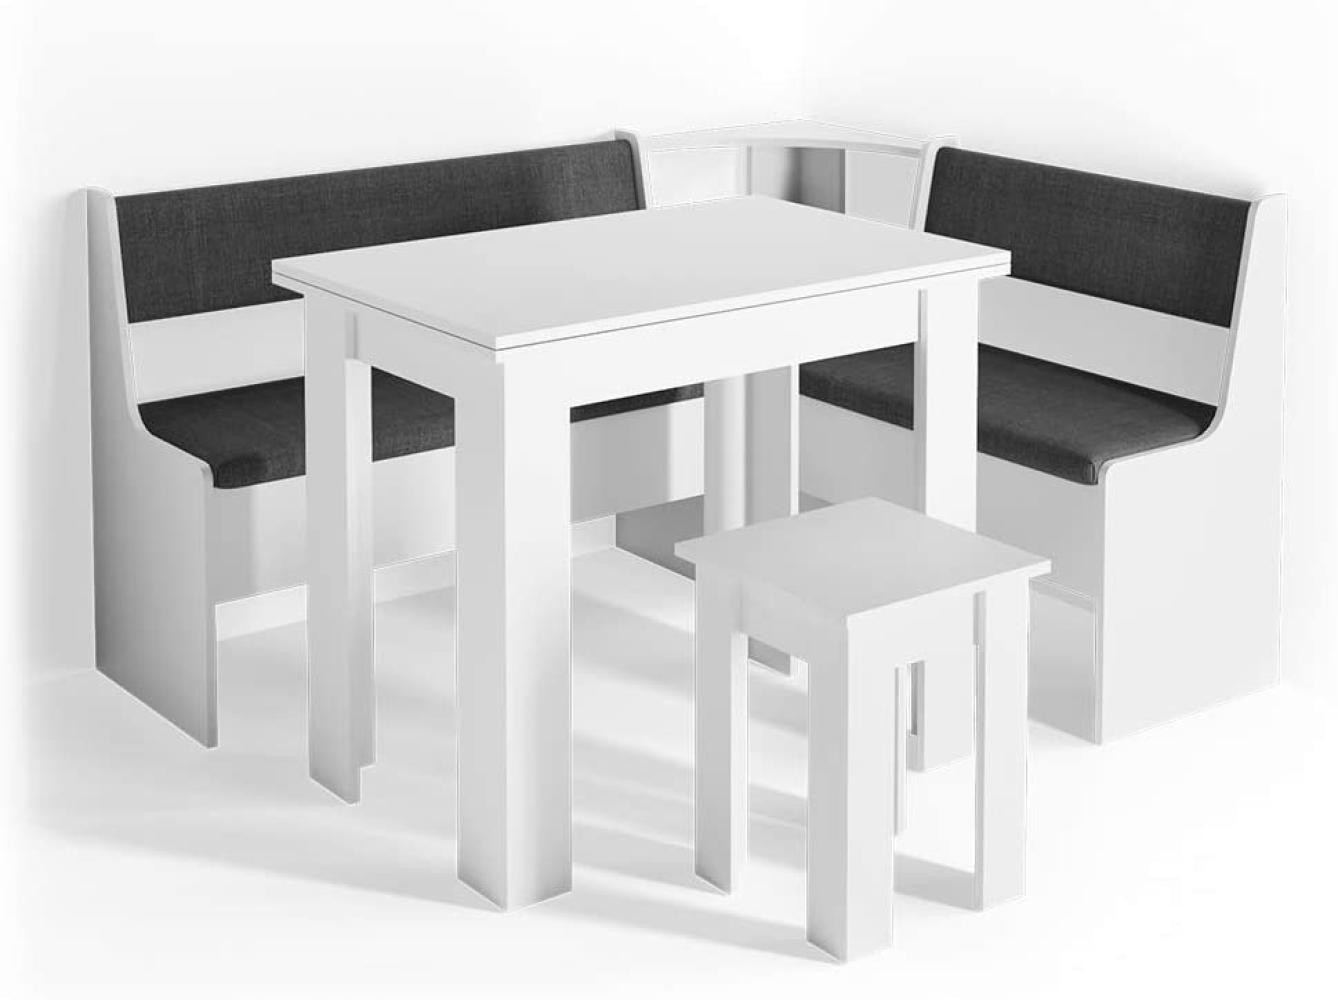 Vicco Eckbankgruppe Roman Esszimmergruppe Eckbank Sitzgruppe Tisch Hocker (Weiß, 150x120cm) Bild 1